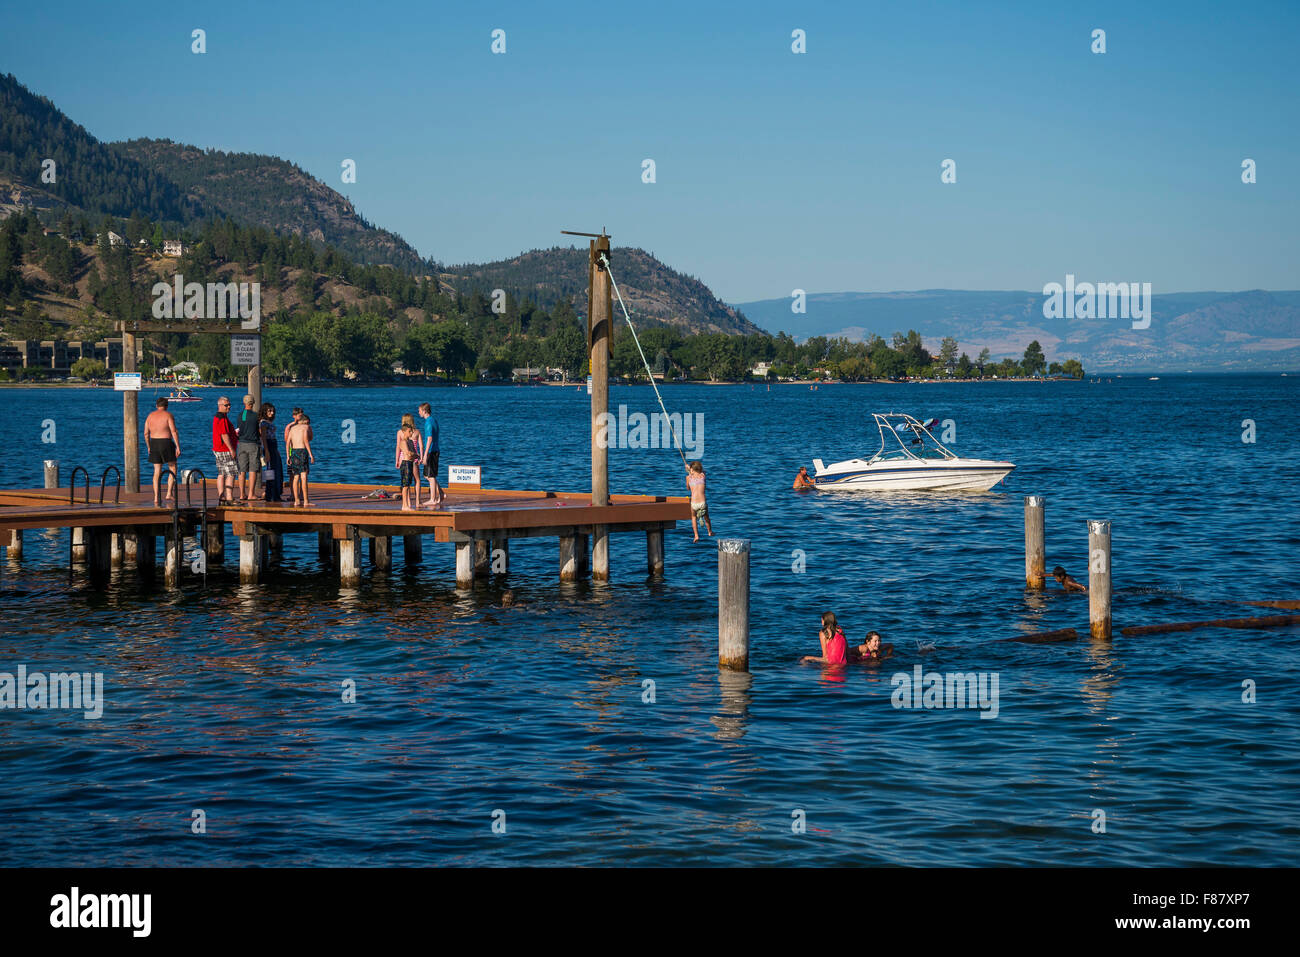 Summer fun at Okanagan Lake, Peachland, Okanagan Valley, British Columbia, Canada Stock Photo